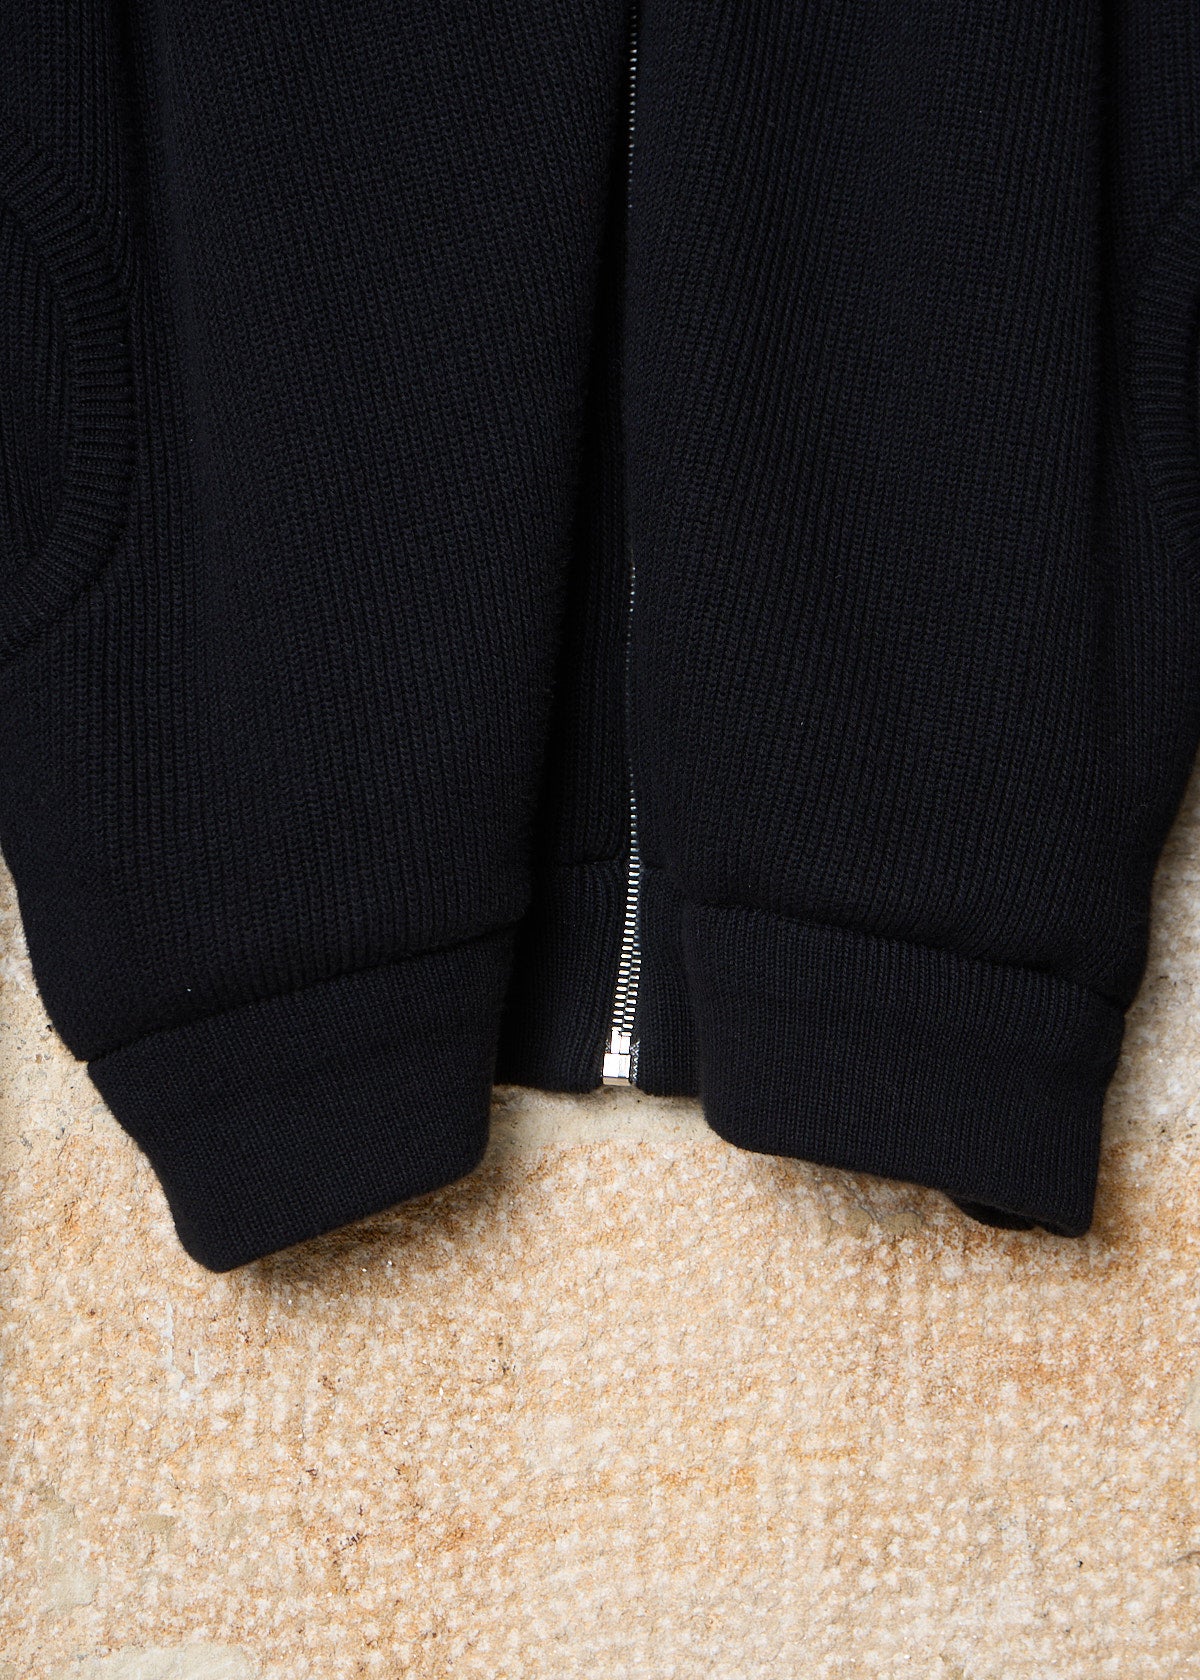 Black Cotton Round Pocket Full Zip Knit 1990's - Large